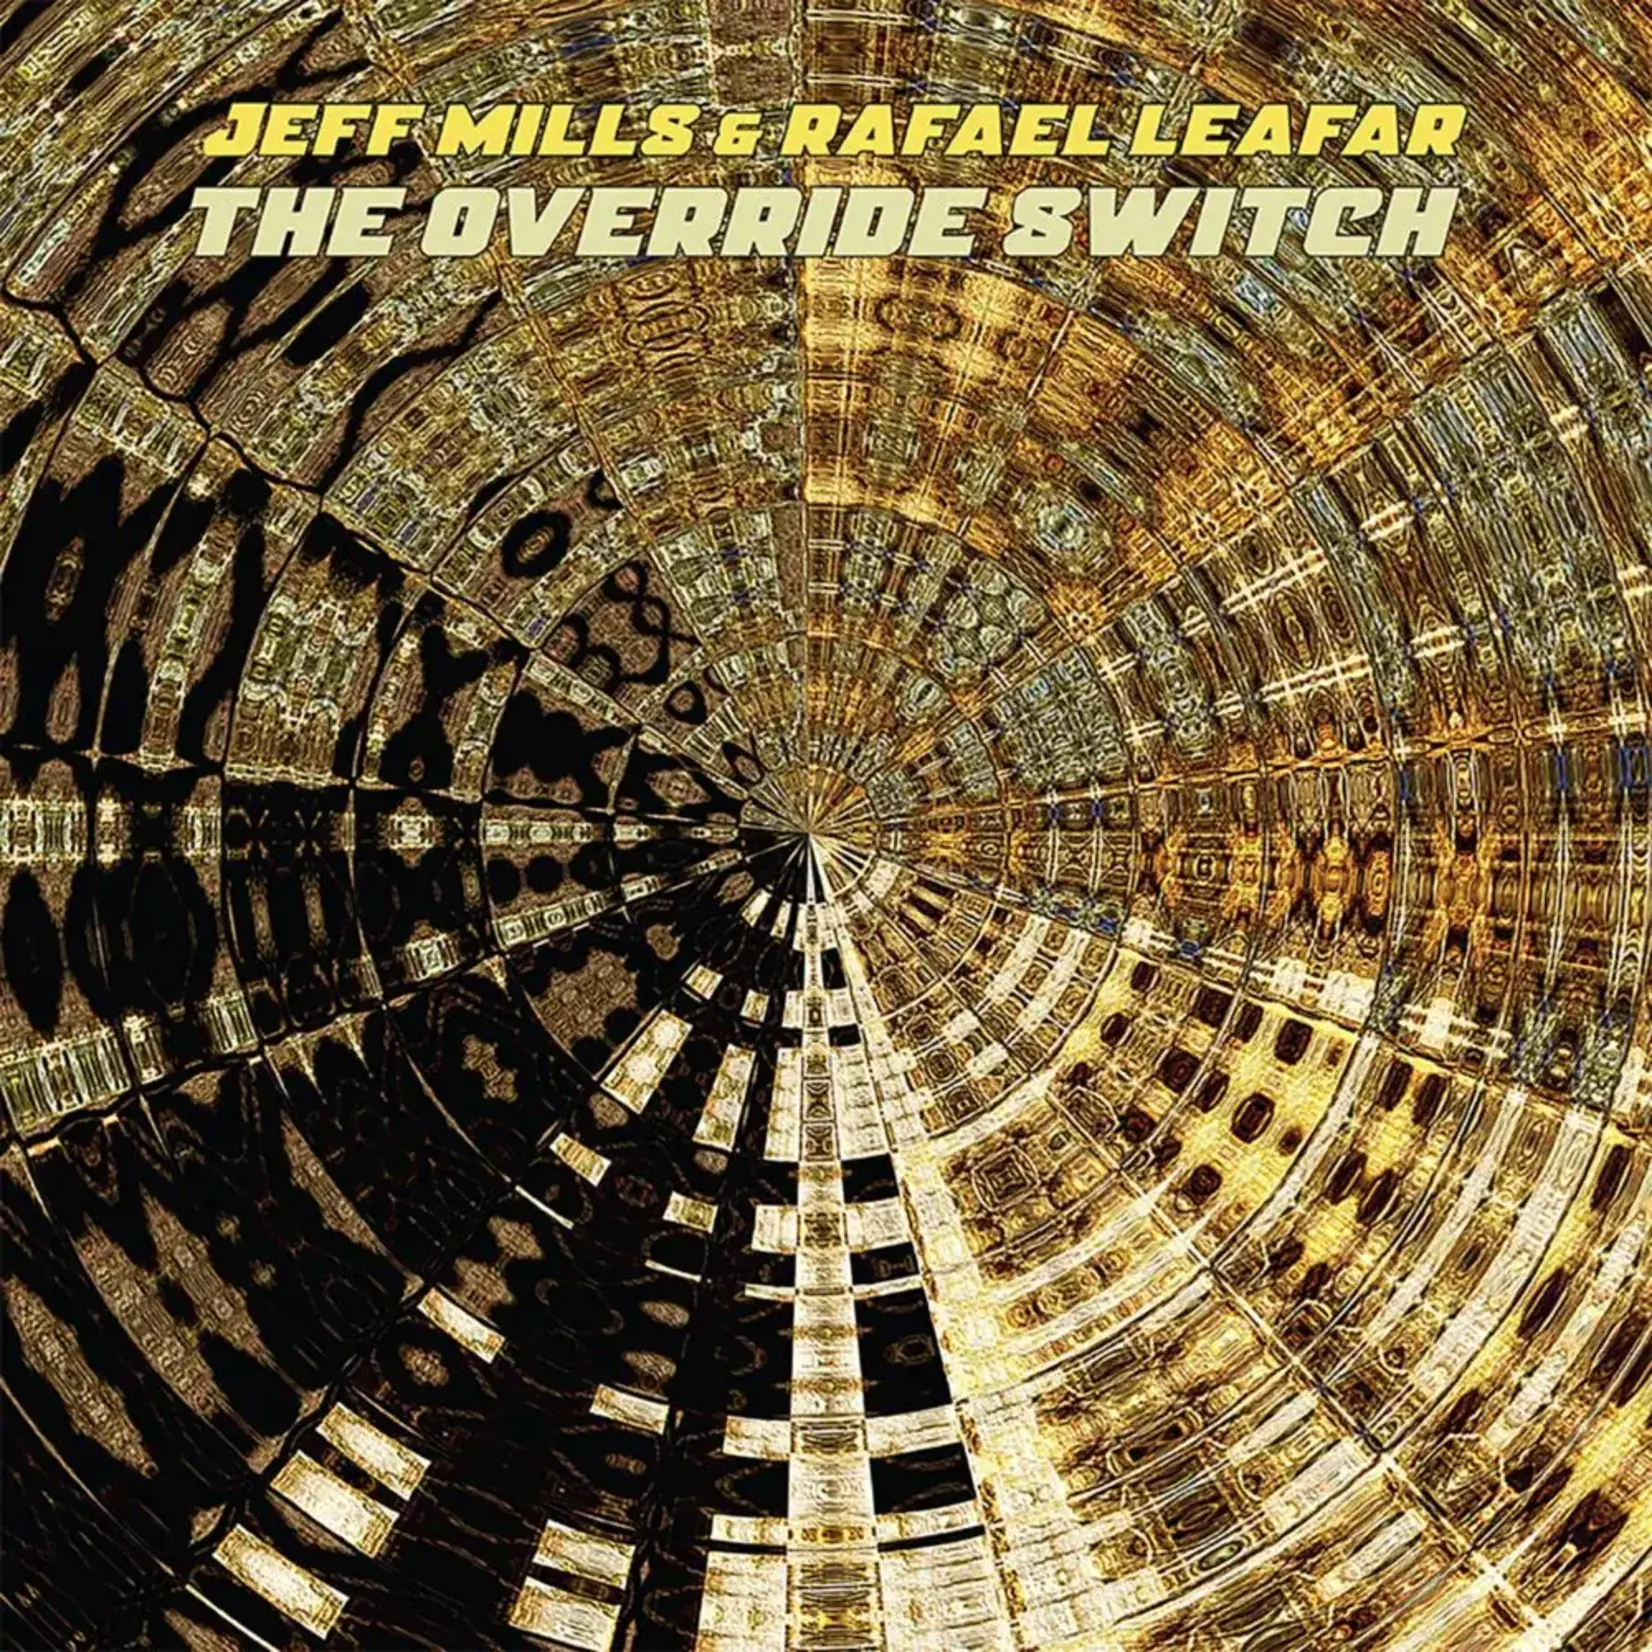 Jeff Mills & Rafael Leafar – The Override Switch